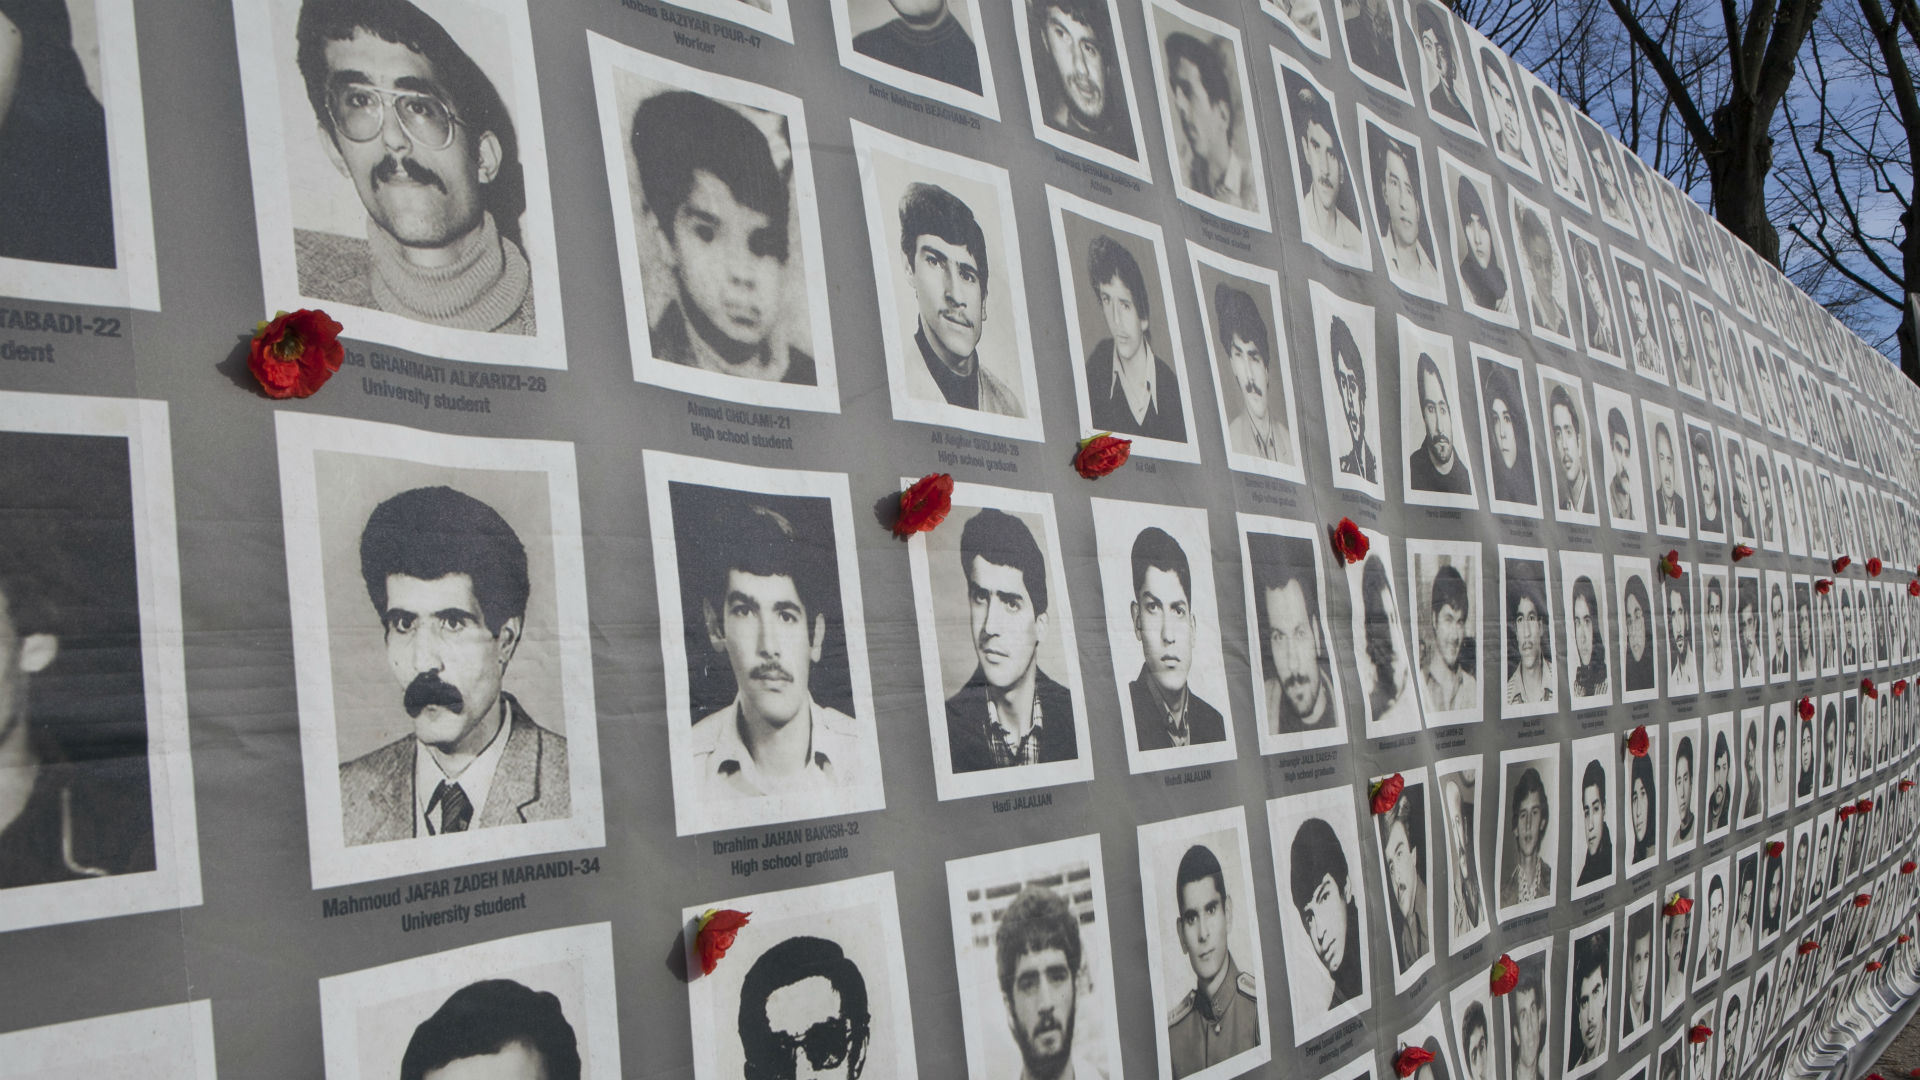 Iran destroys mass graves of 1988 prison massacre victims